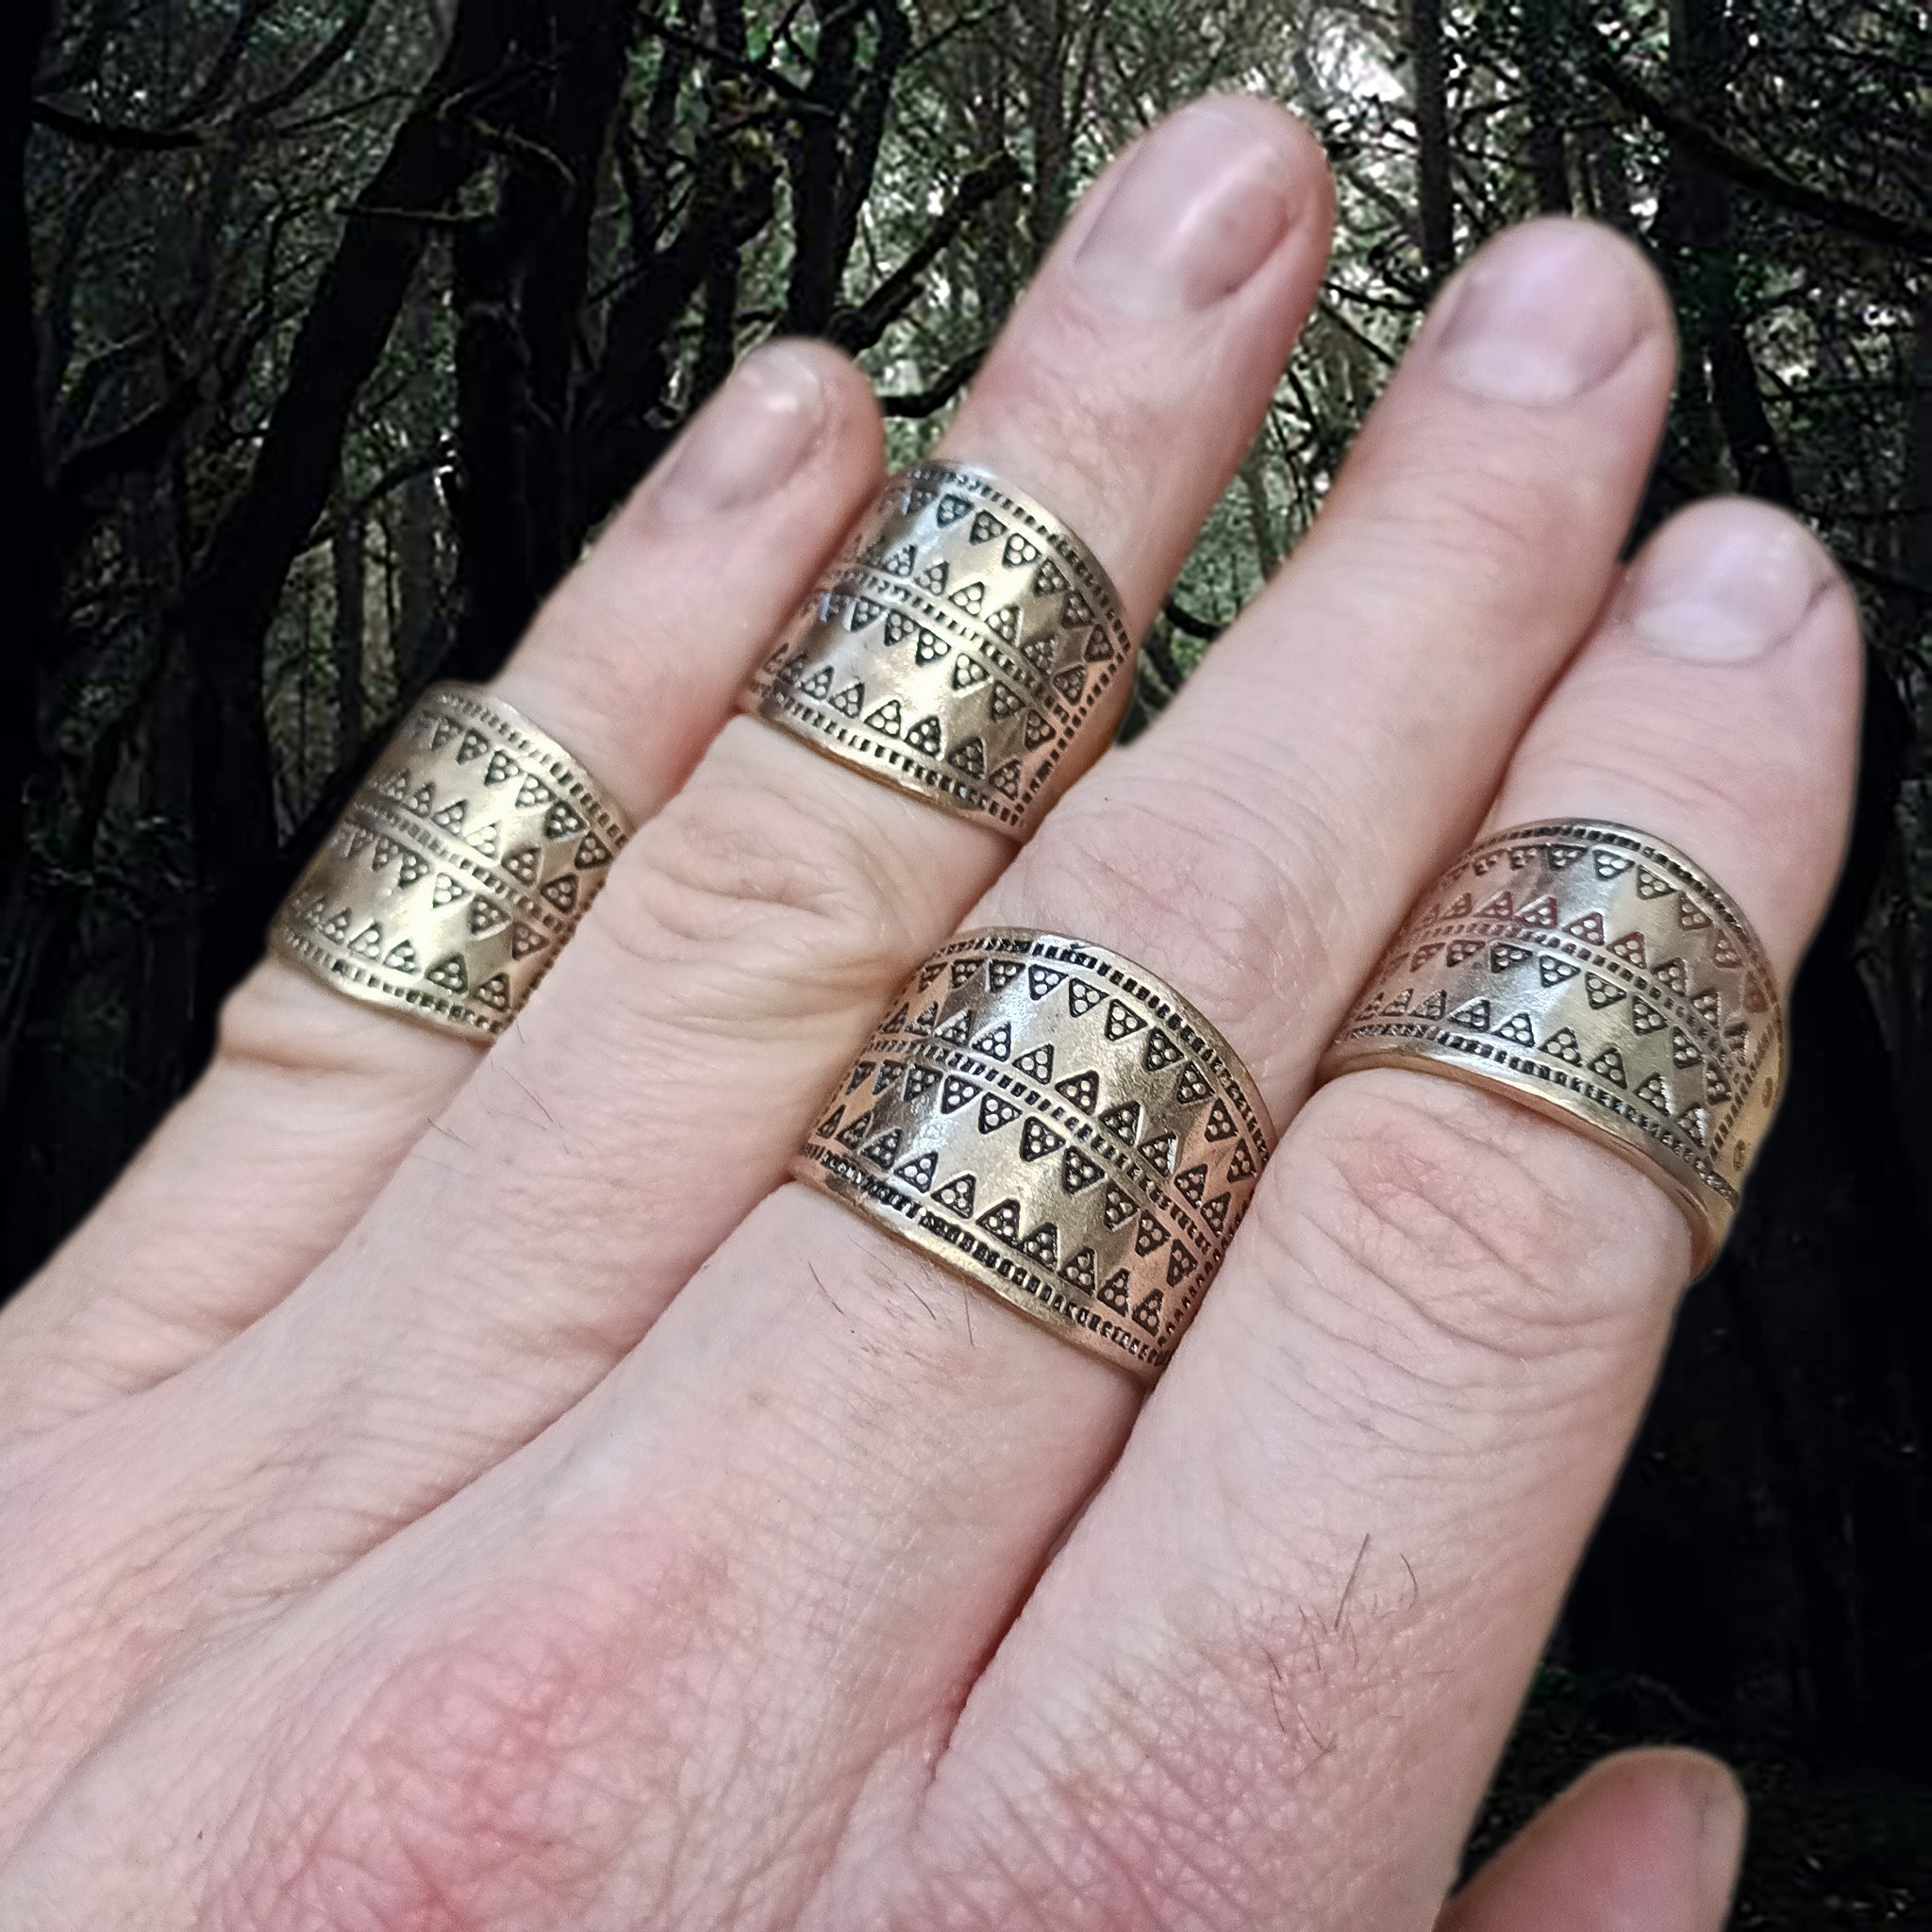 Embossed Replica Viking Bronze Rings on Fingers